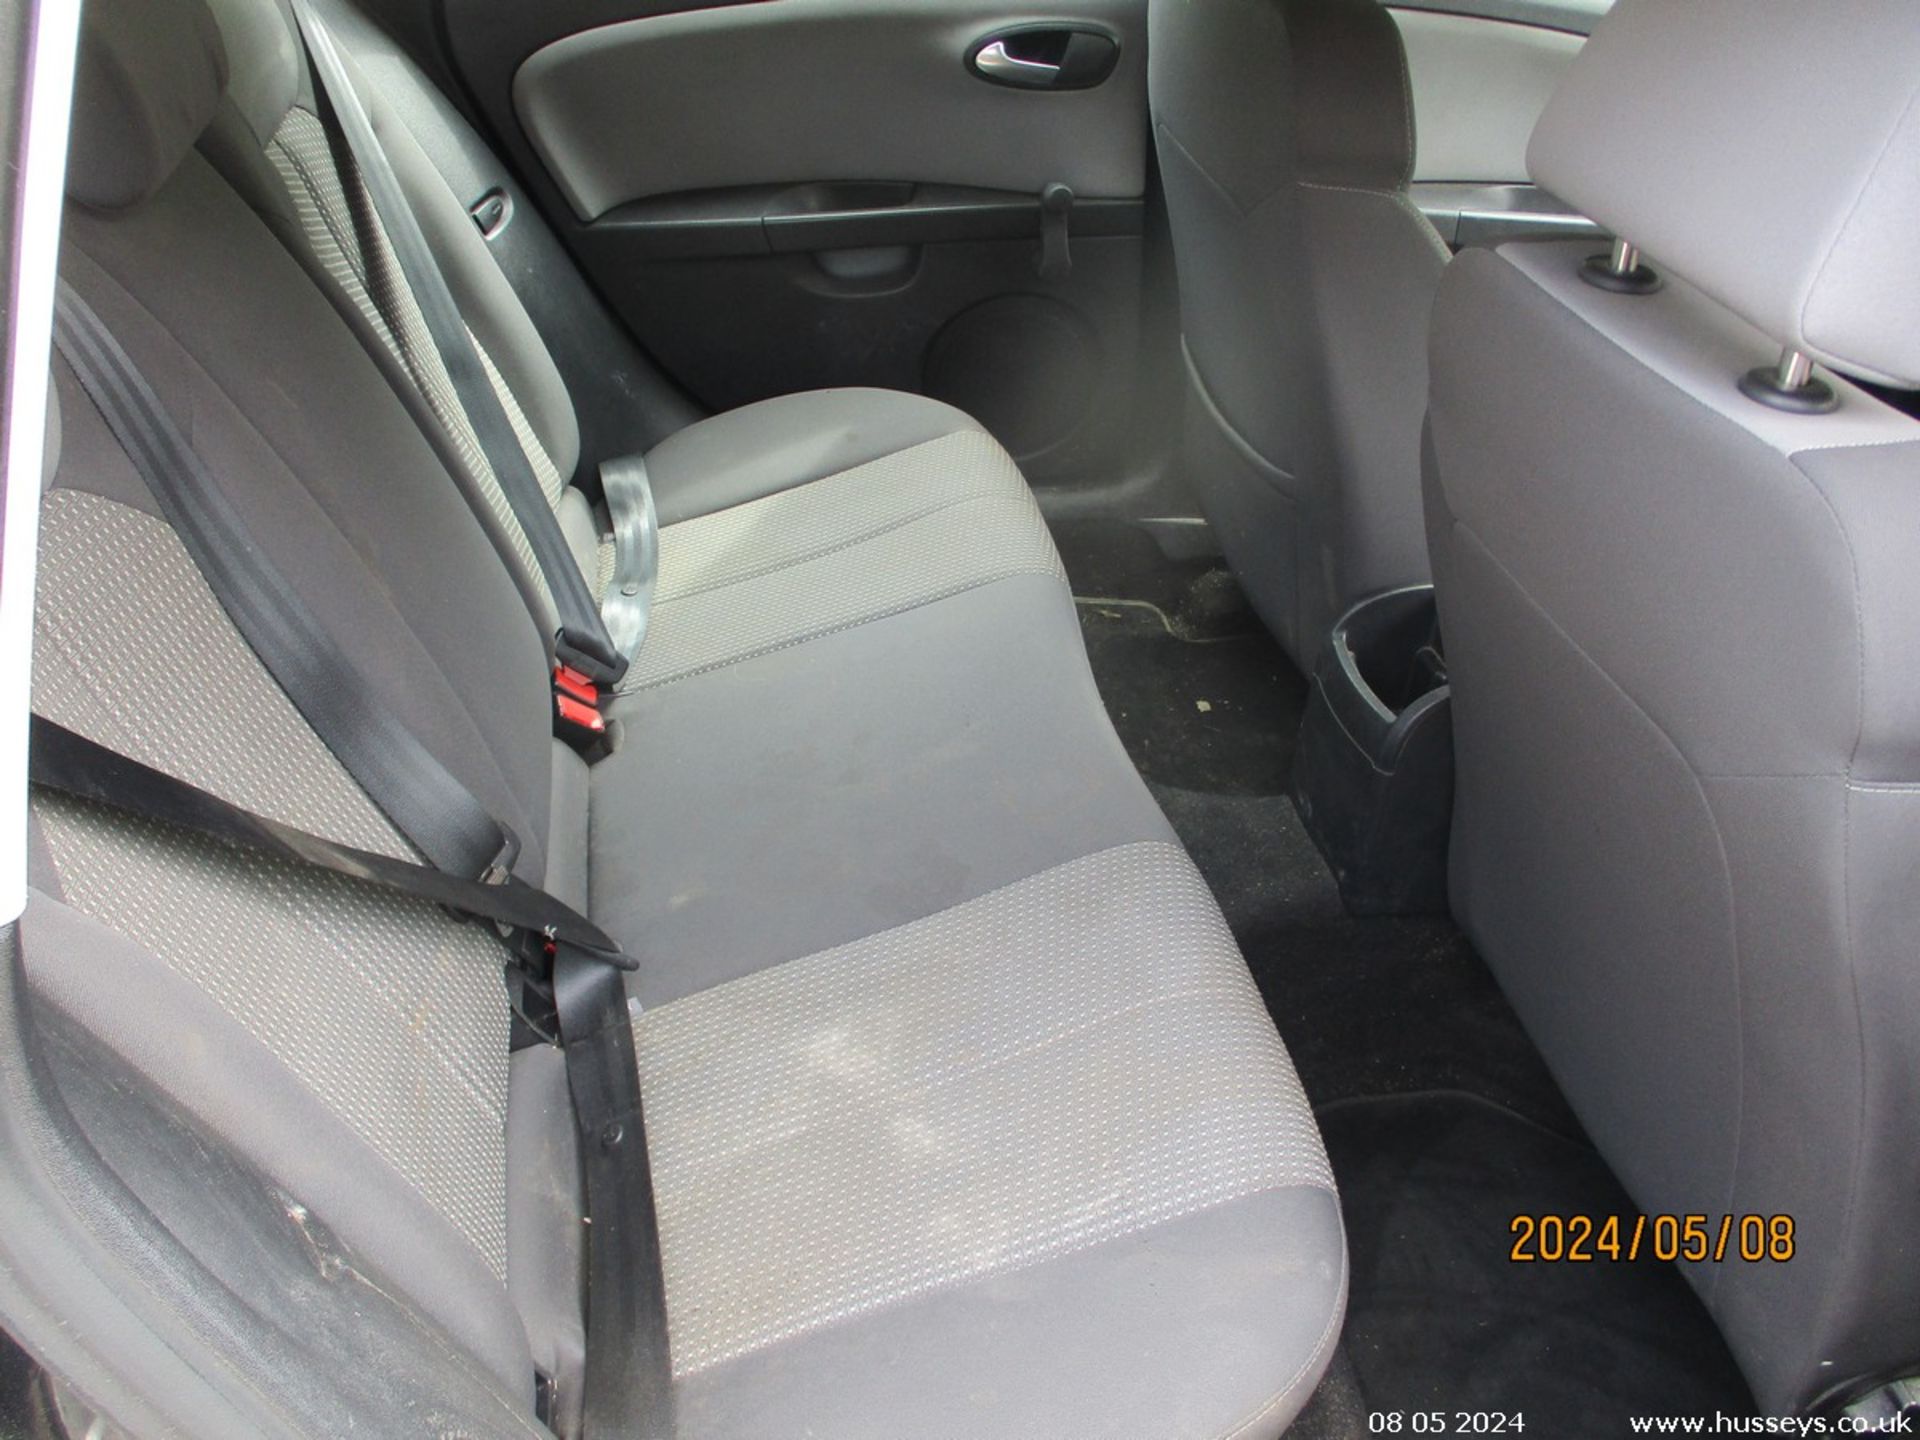 11/11 SEAT LEON S CR TDI - 1598cc 5dr Hatchback (Grey, 160k) - Image 10 of 48